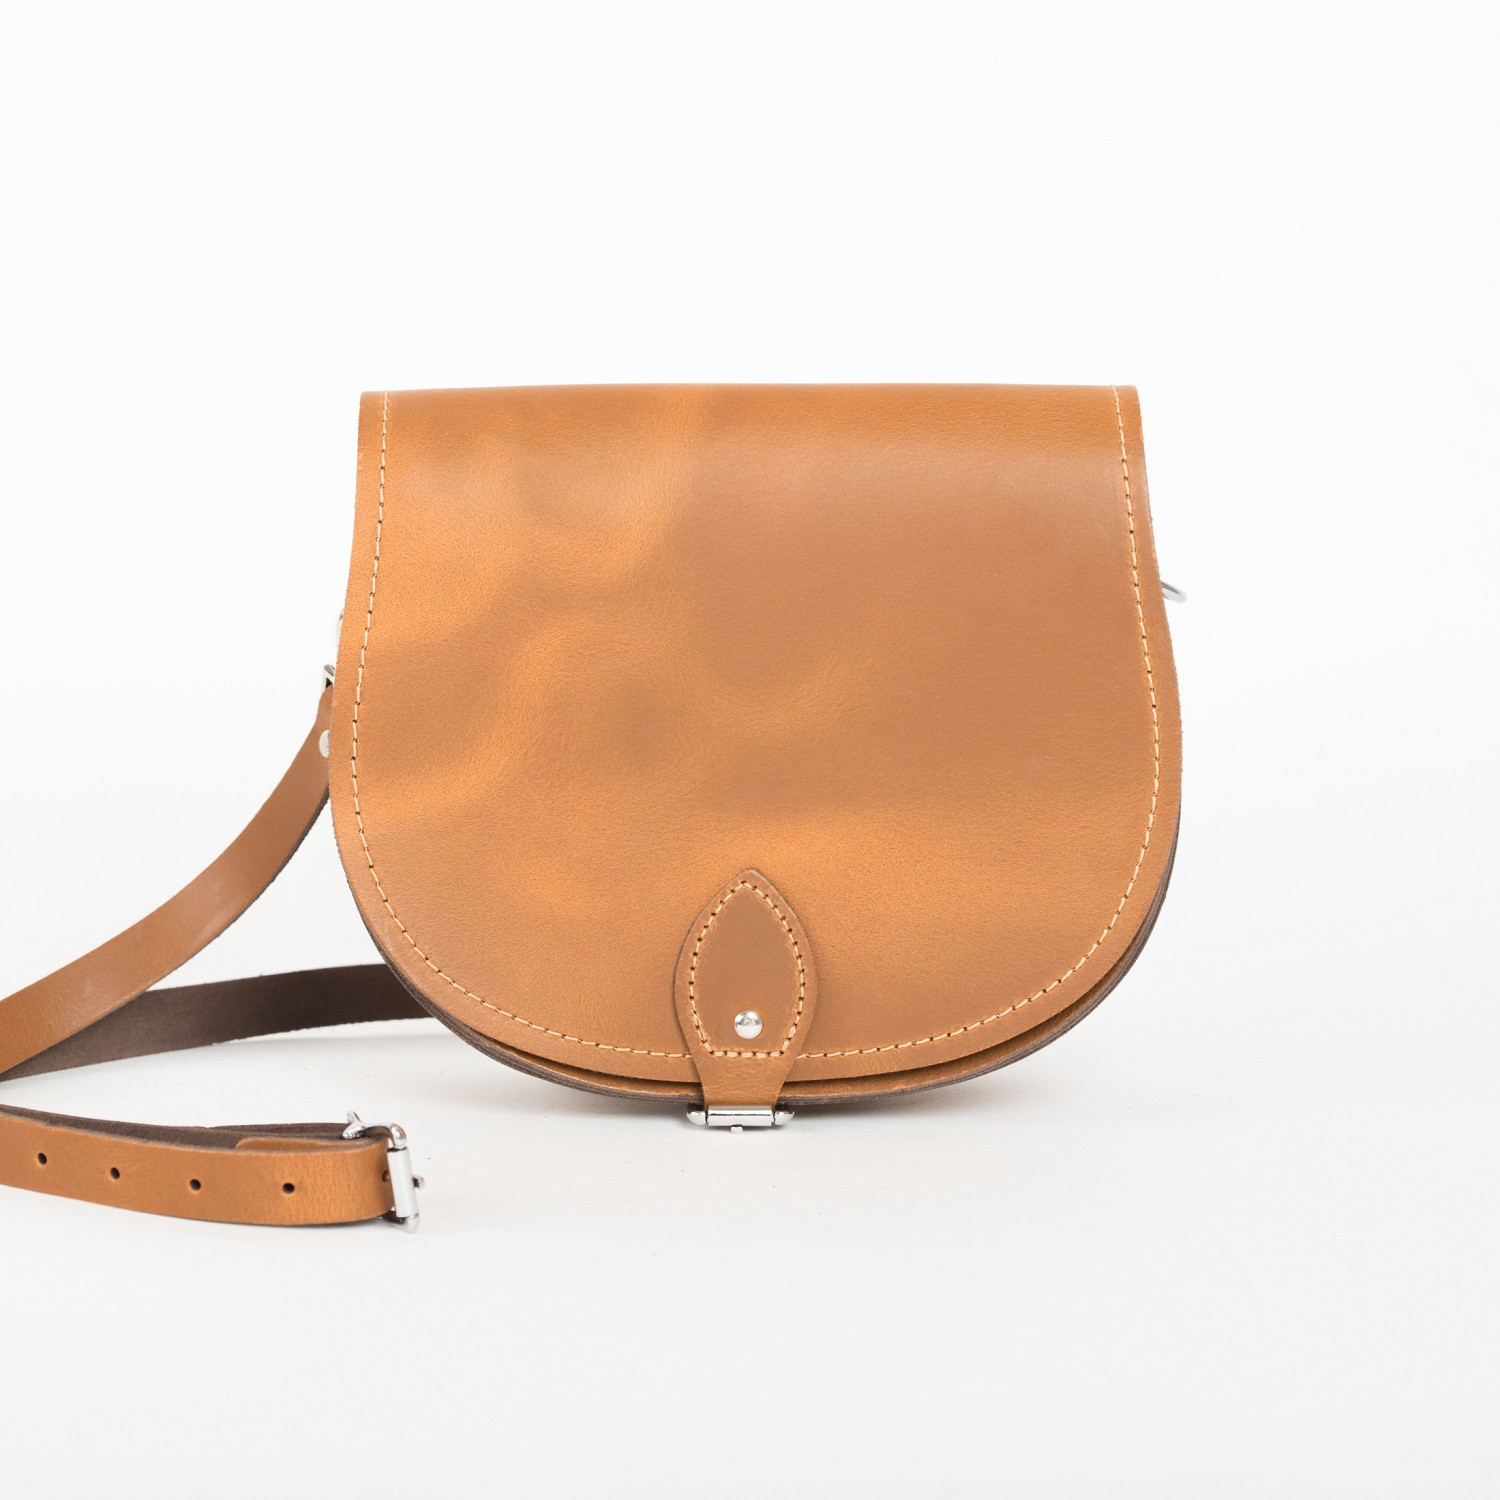 Avery Premium Leather Saddle Bag in Vintage Tan